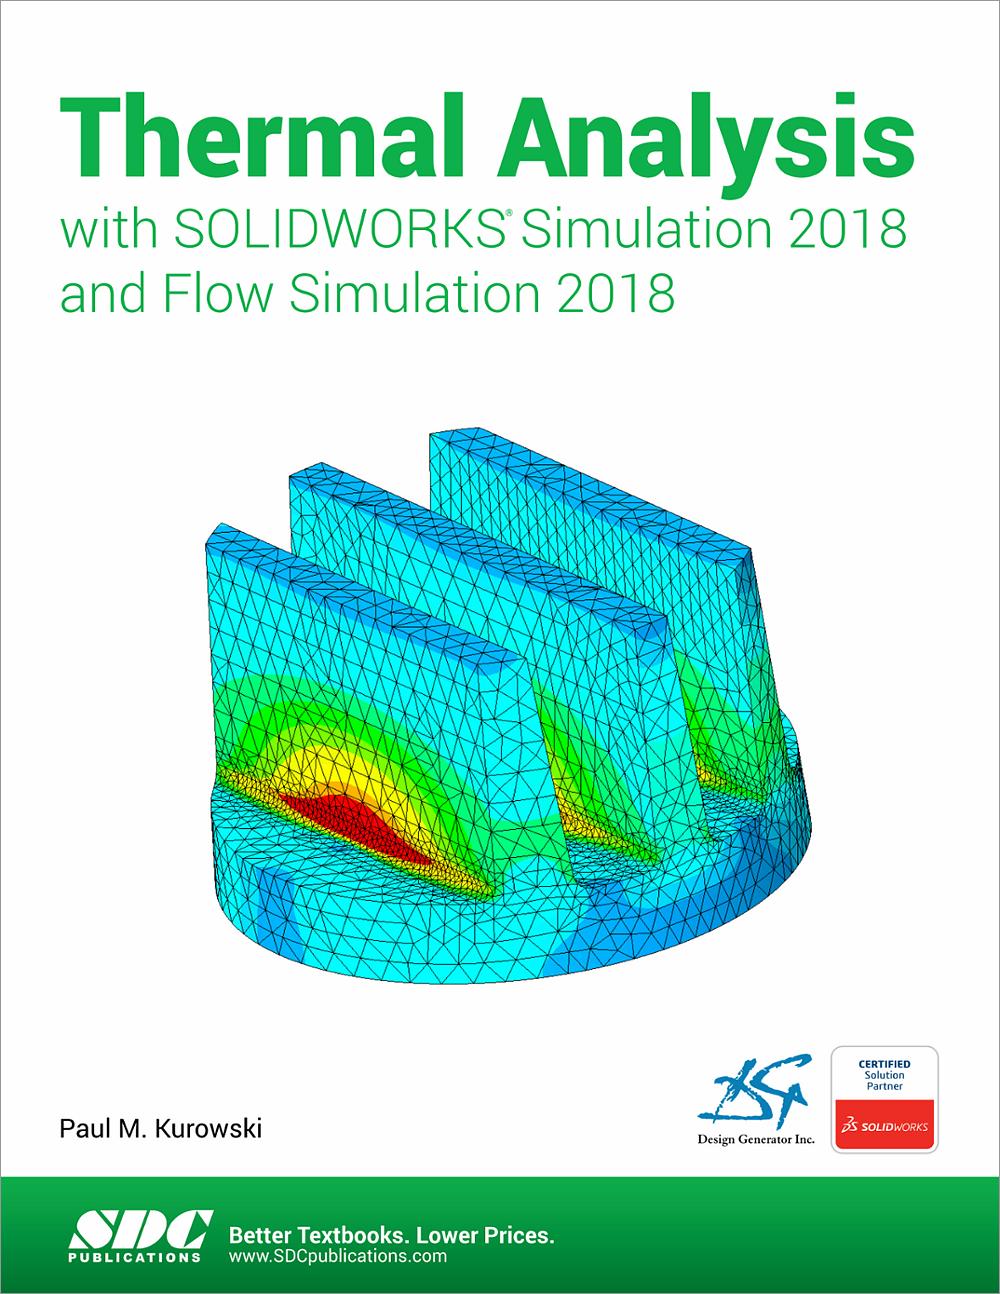 solidworks flow simulation 2018 black book pdf download